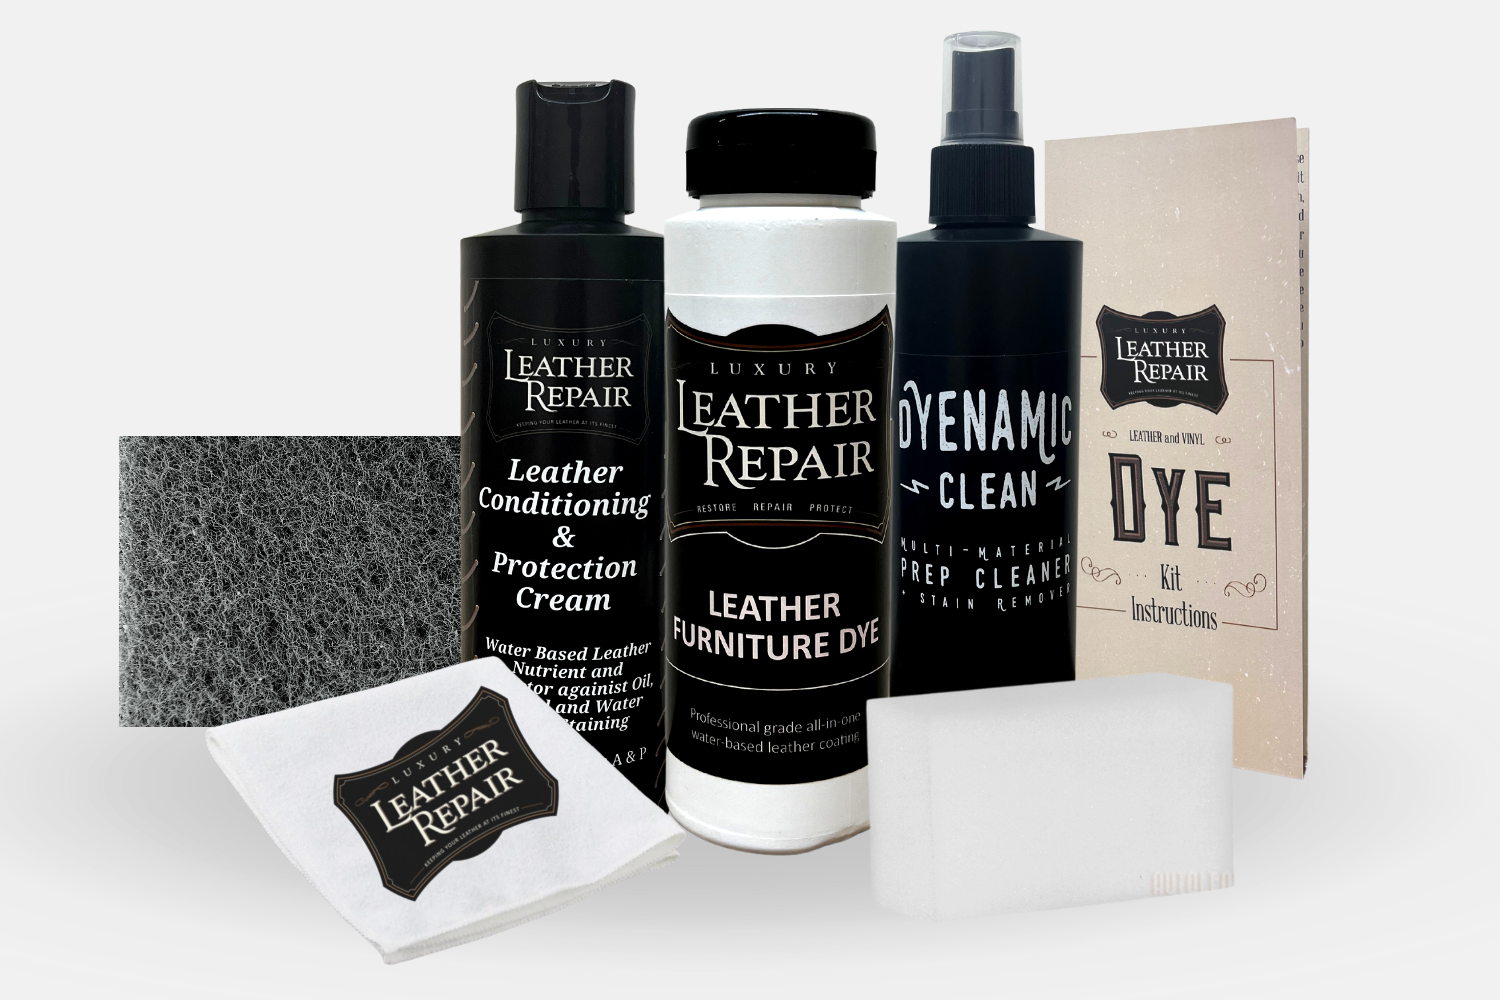 Leather Aniline Furniture Dye